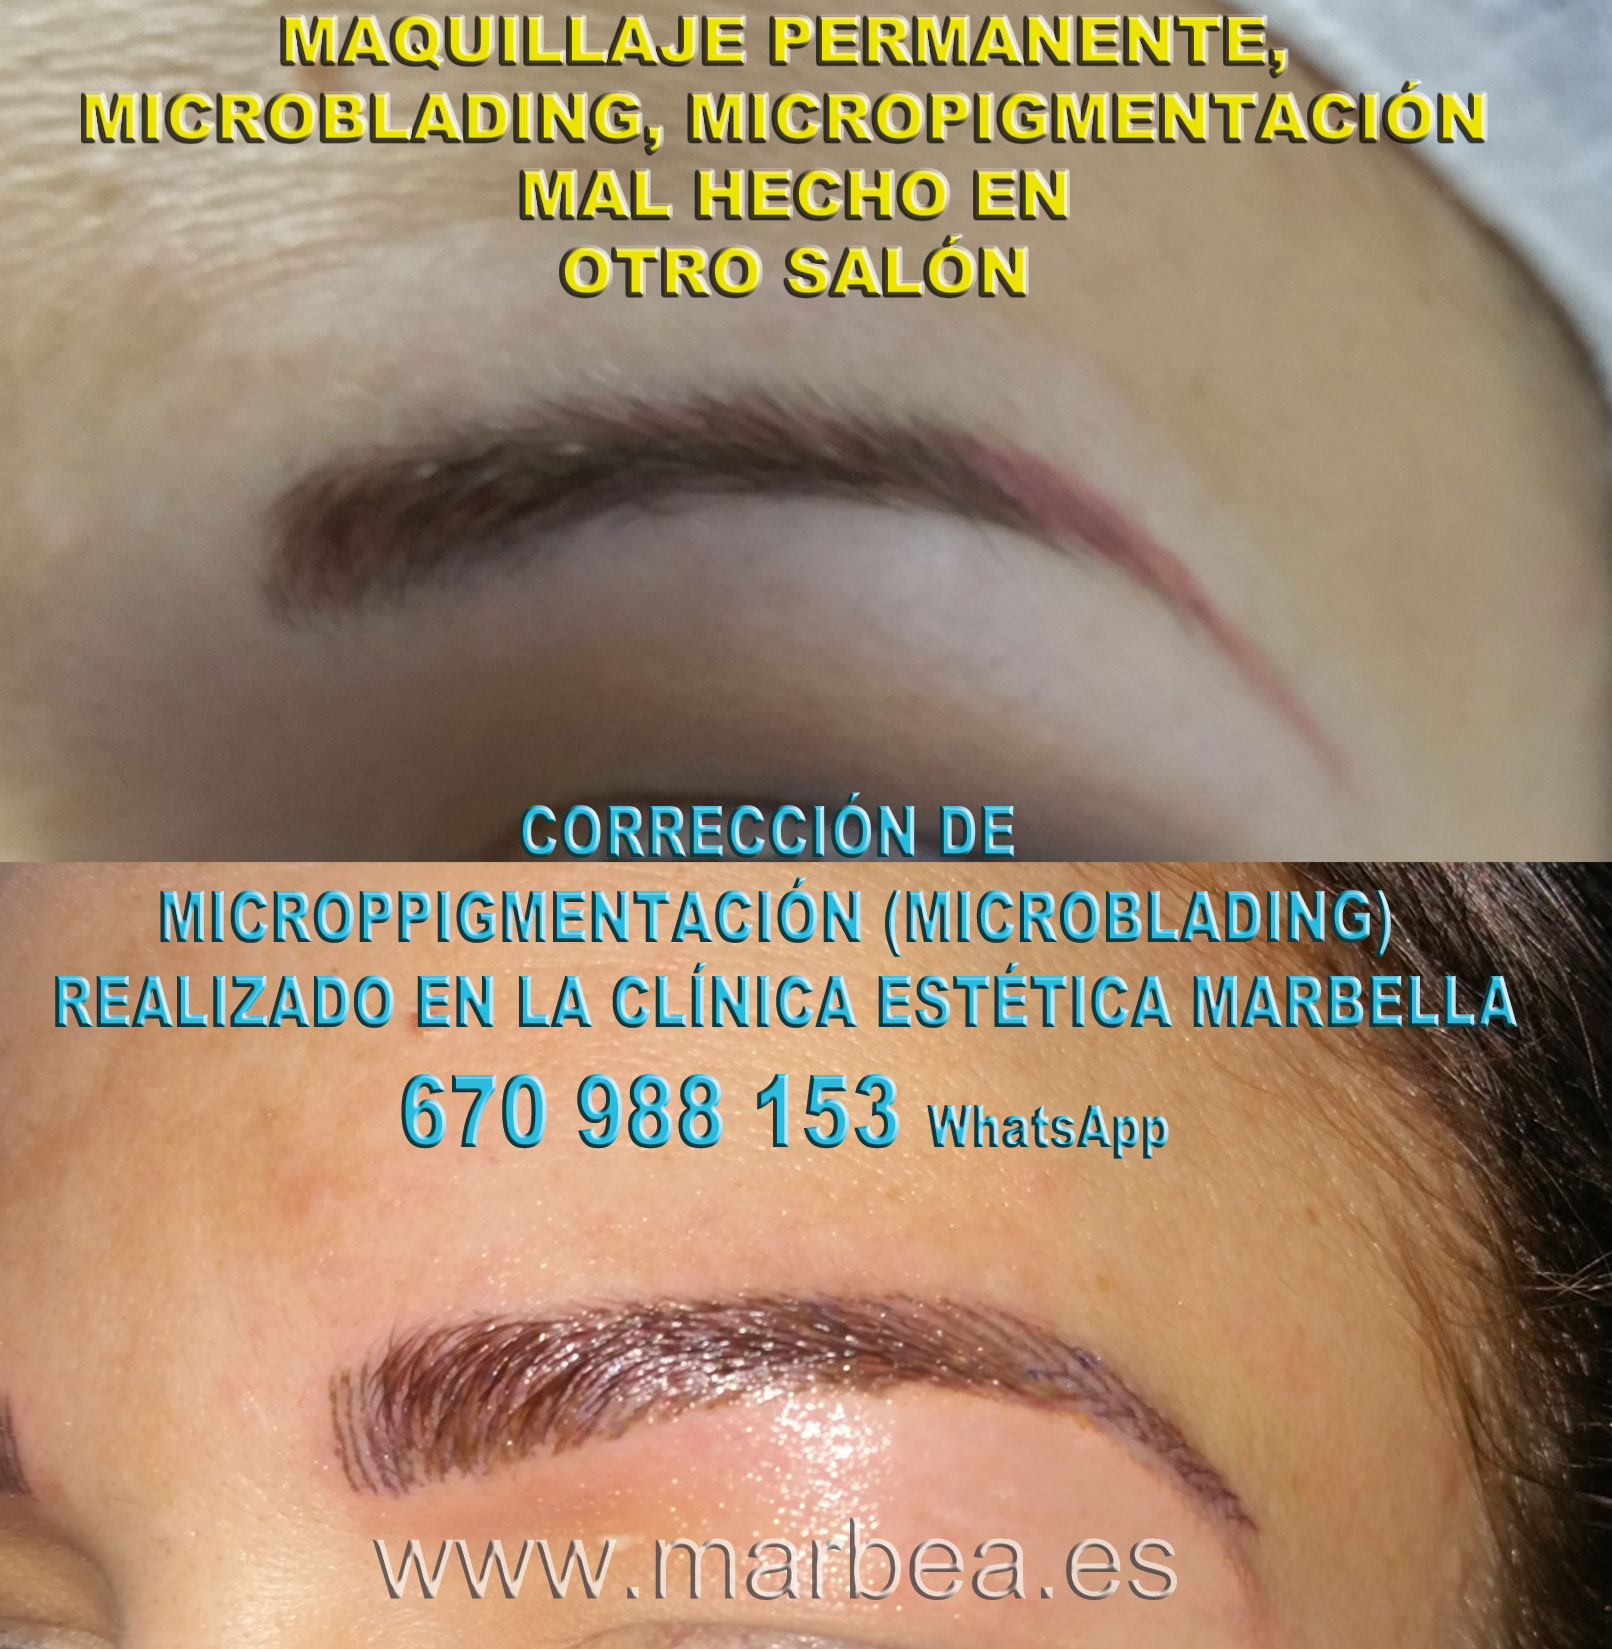 corrección de microblading en cejas clínica estética maquillaje permanete entrega corrección de cejas mal tatuadas,corregir micropigmentación no deseada